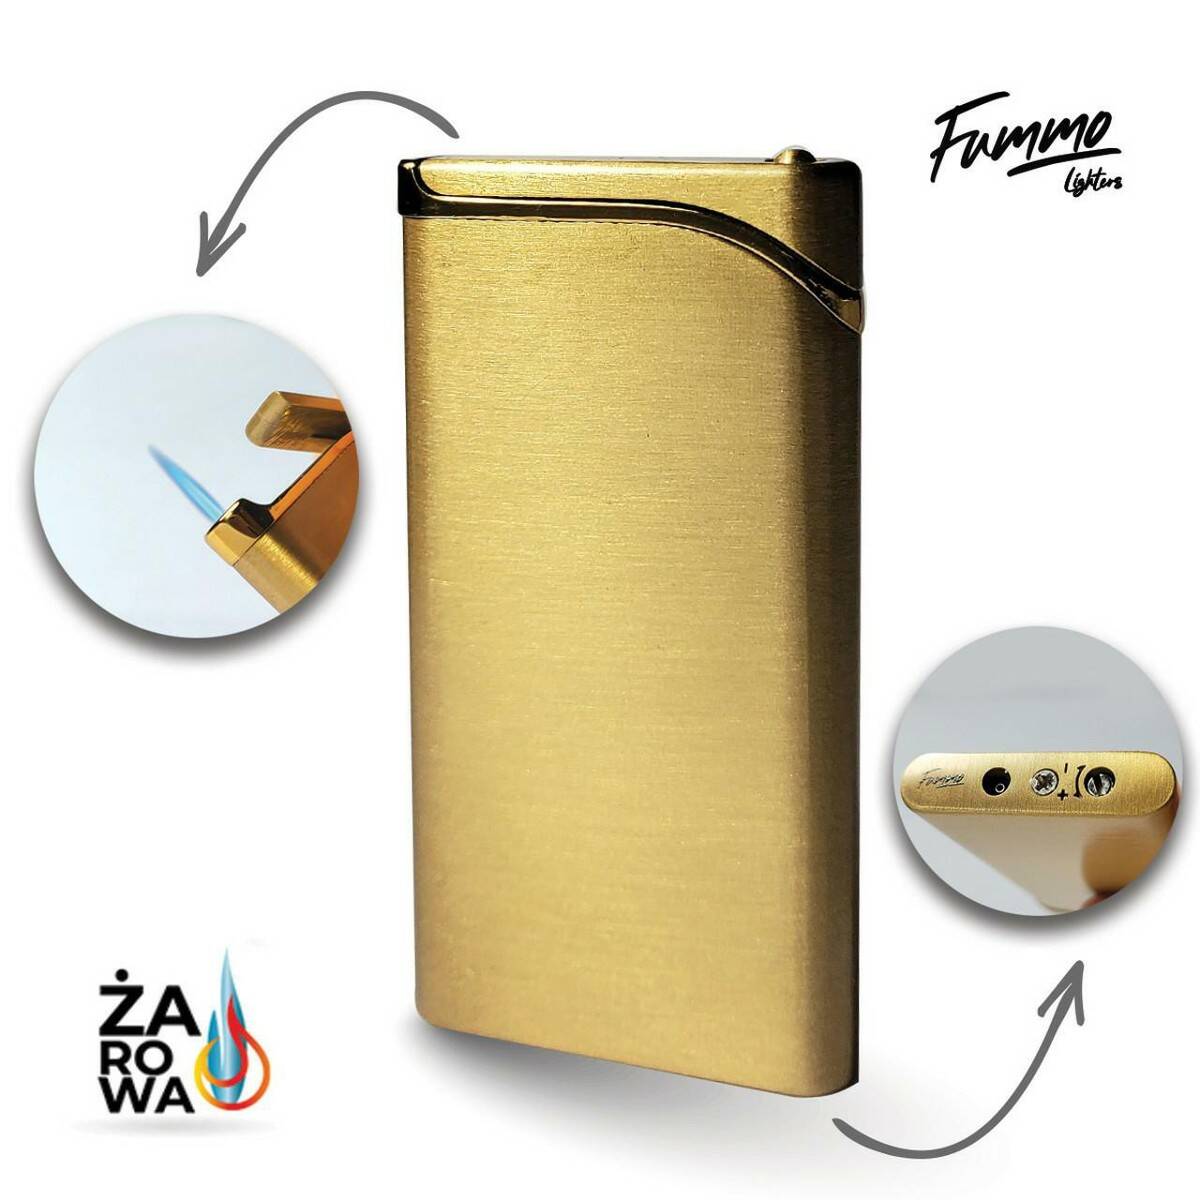 Lighter - Fummo Toora (Turbo/Gold)